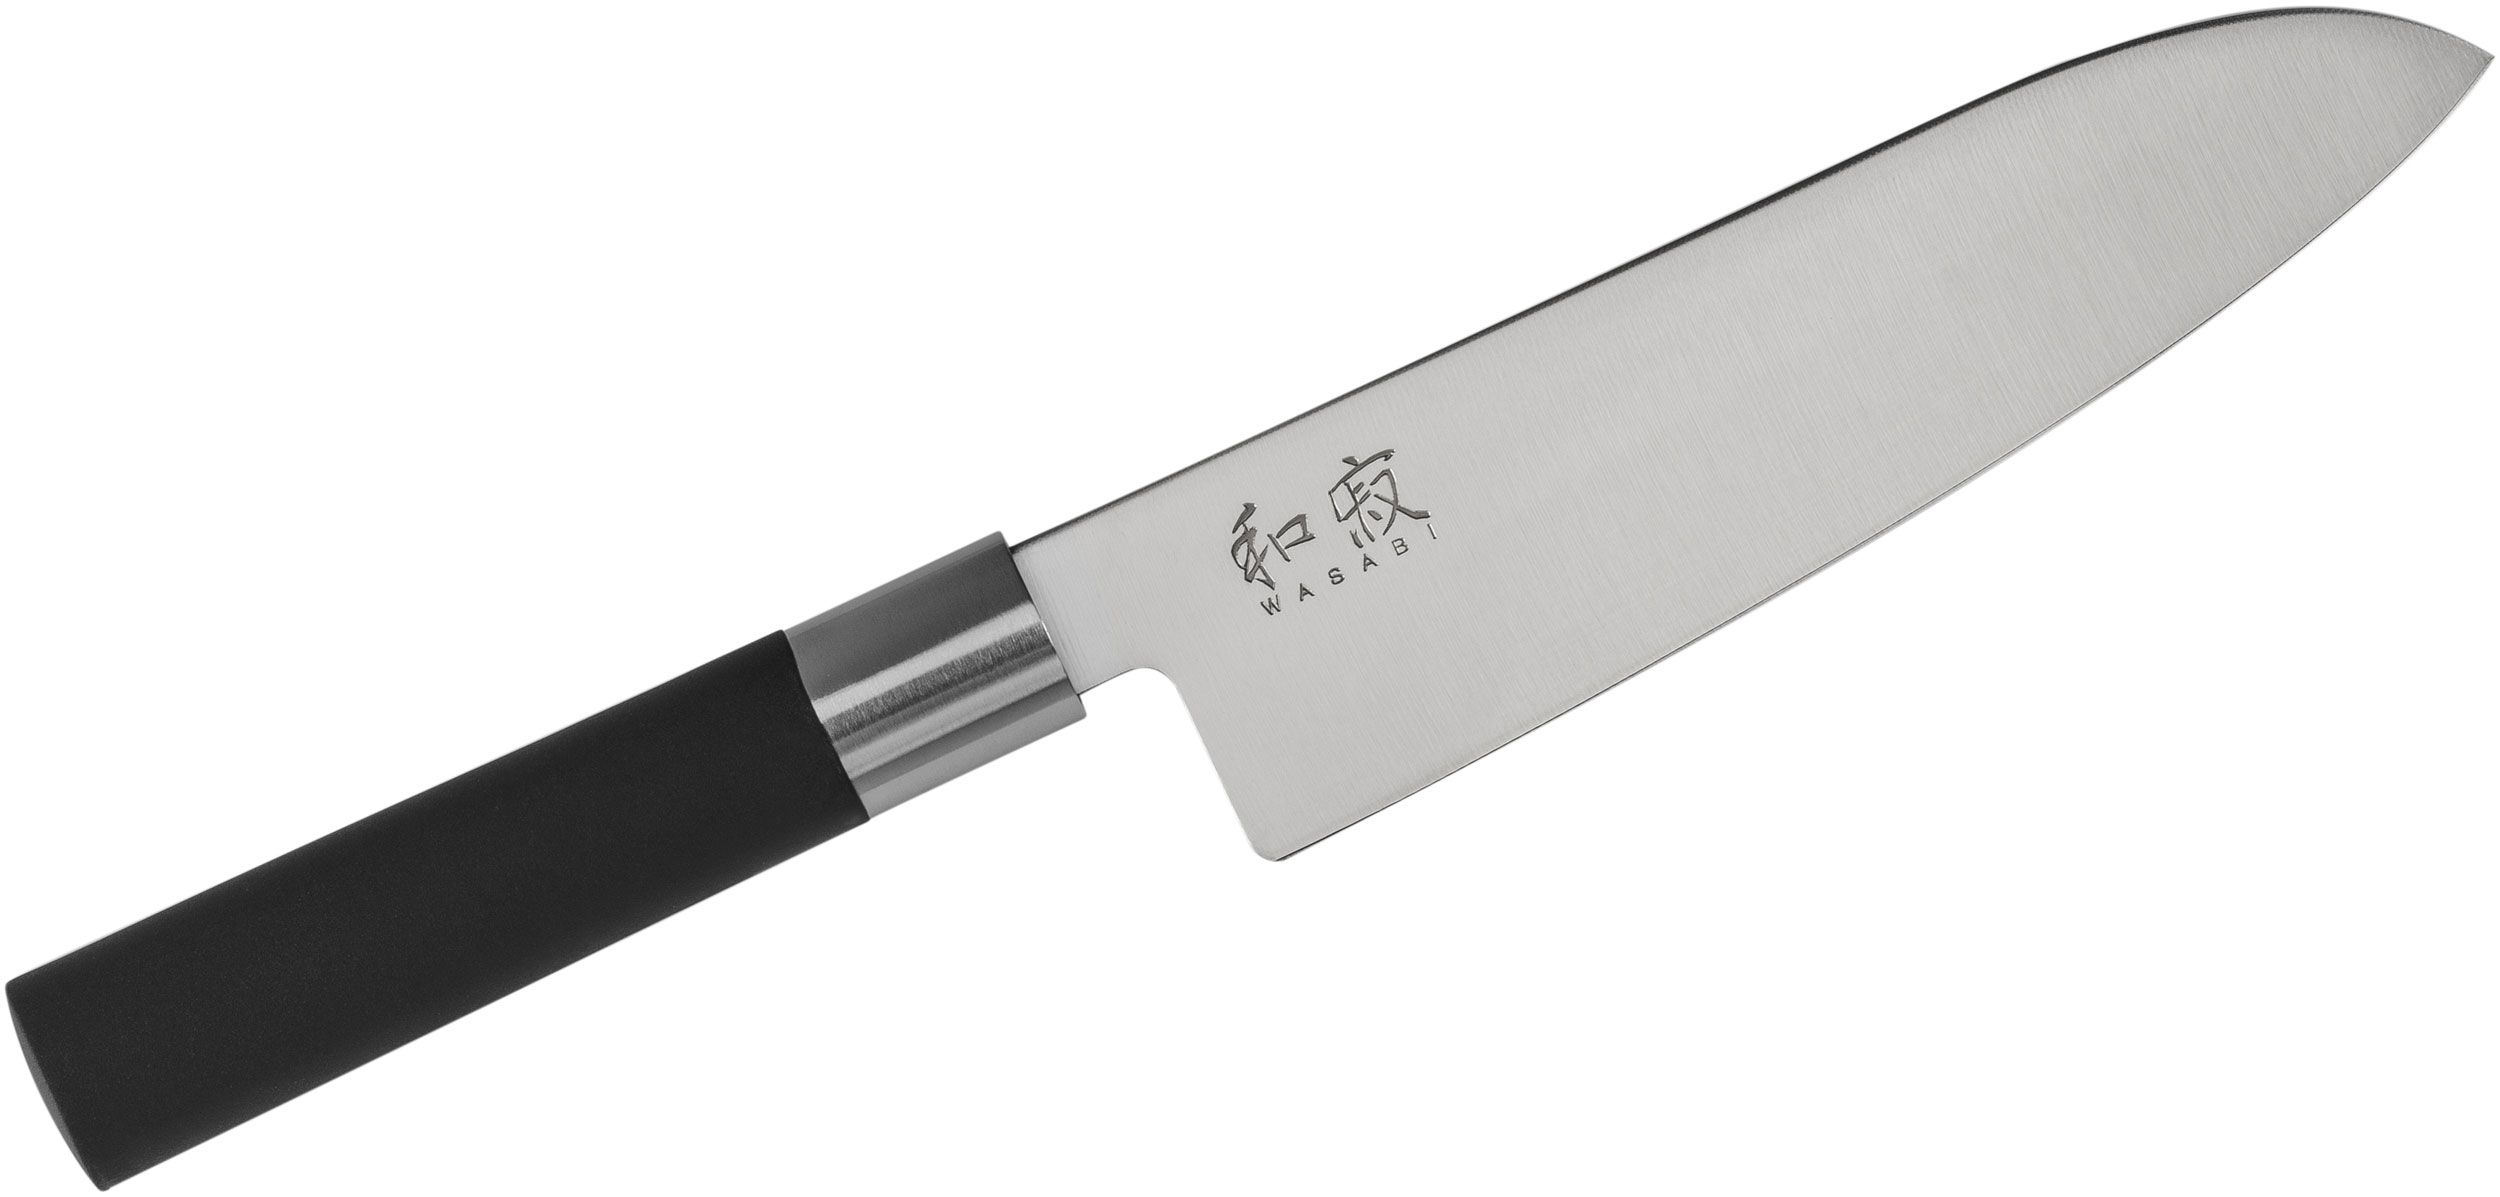 KAI Wasabi WBS0800 8pc Block Knife Set